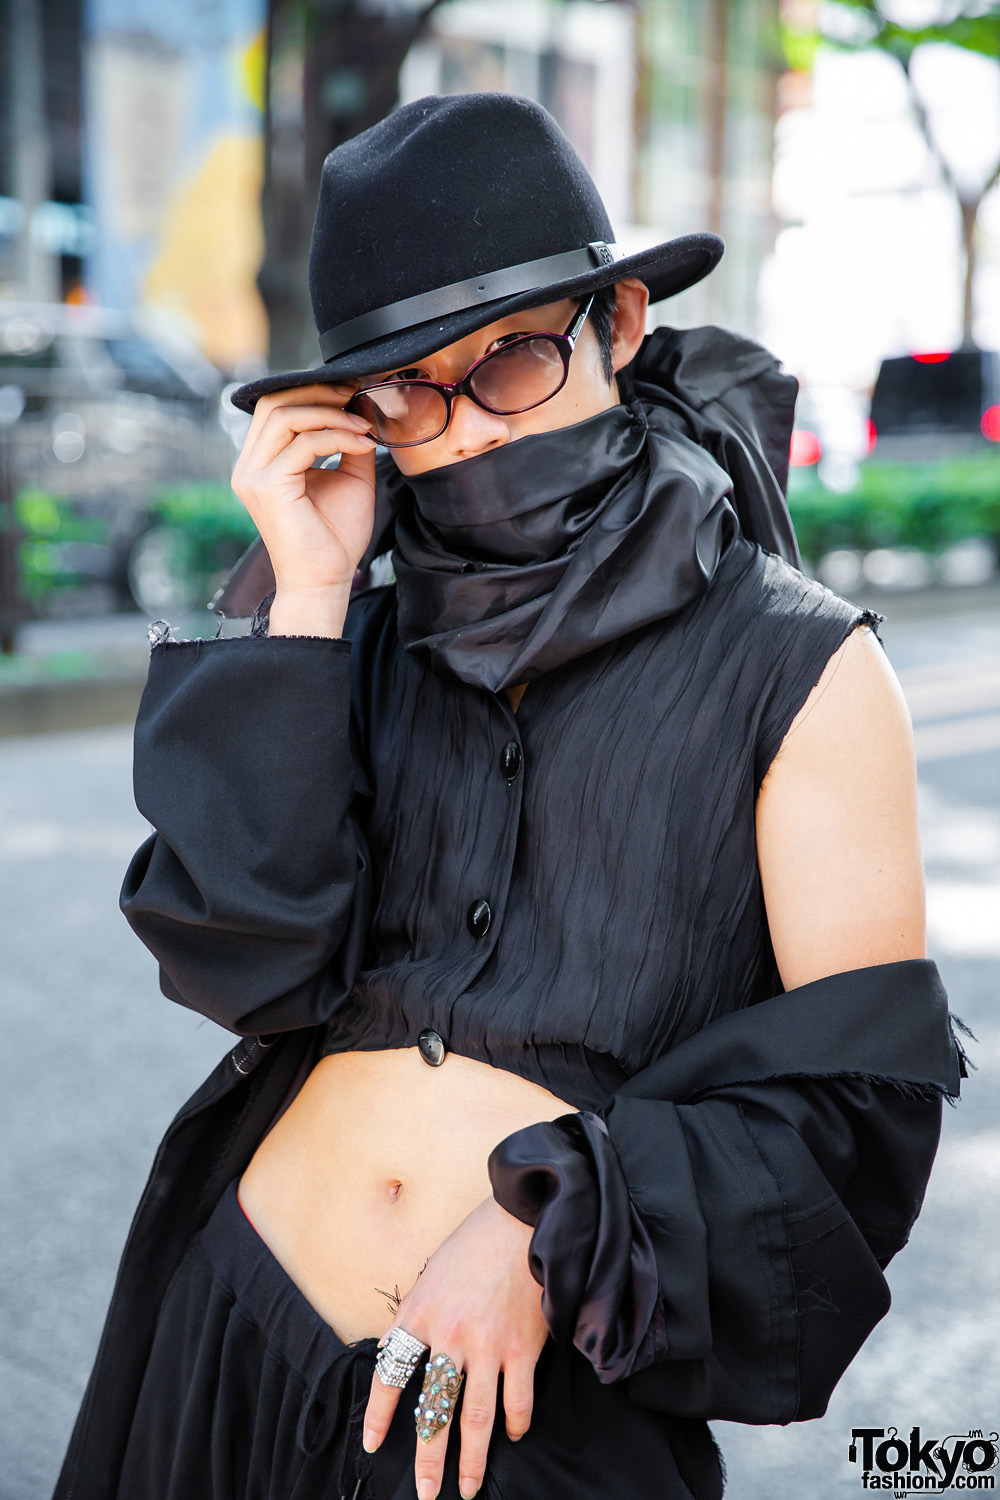 tokyo-fashion:  17-year-old Japanese student Kanji on the street in Harajuku. He’s